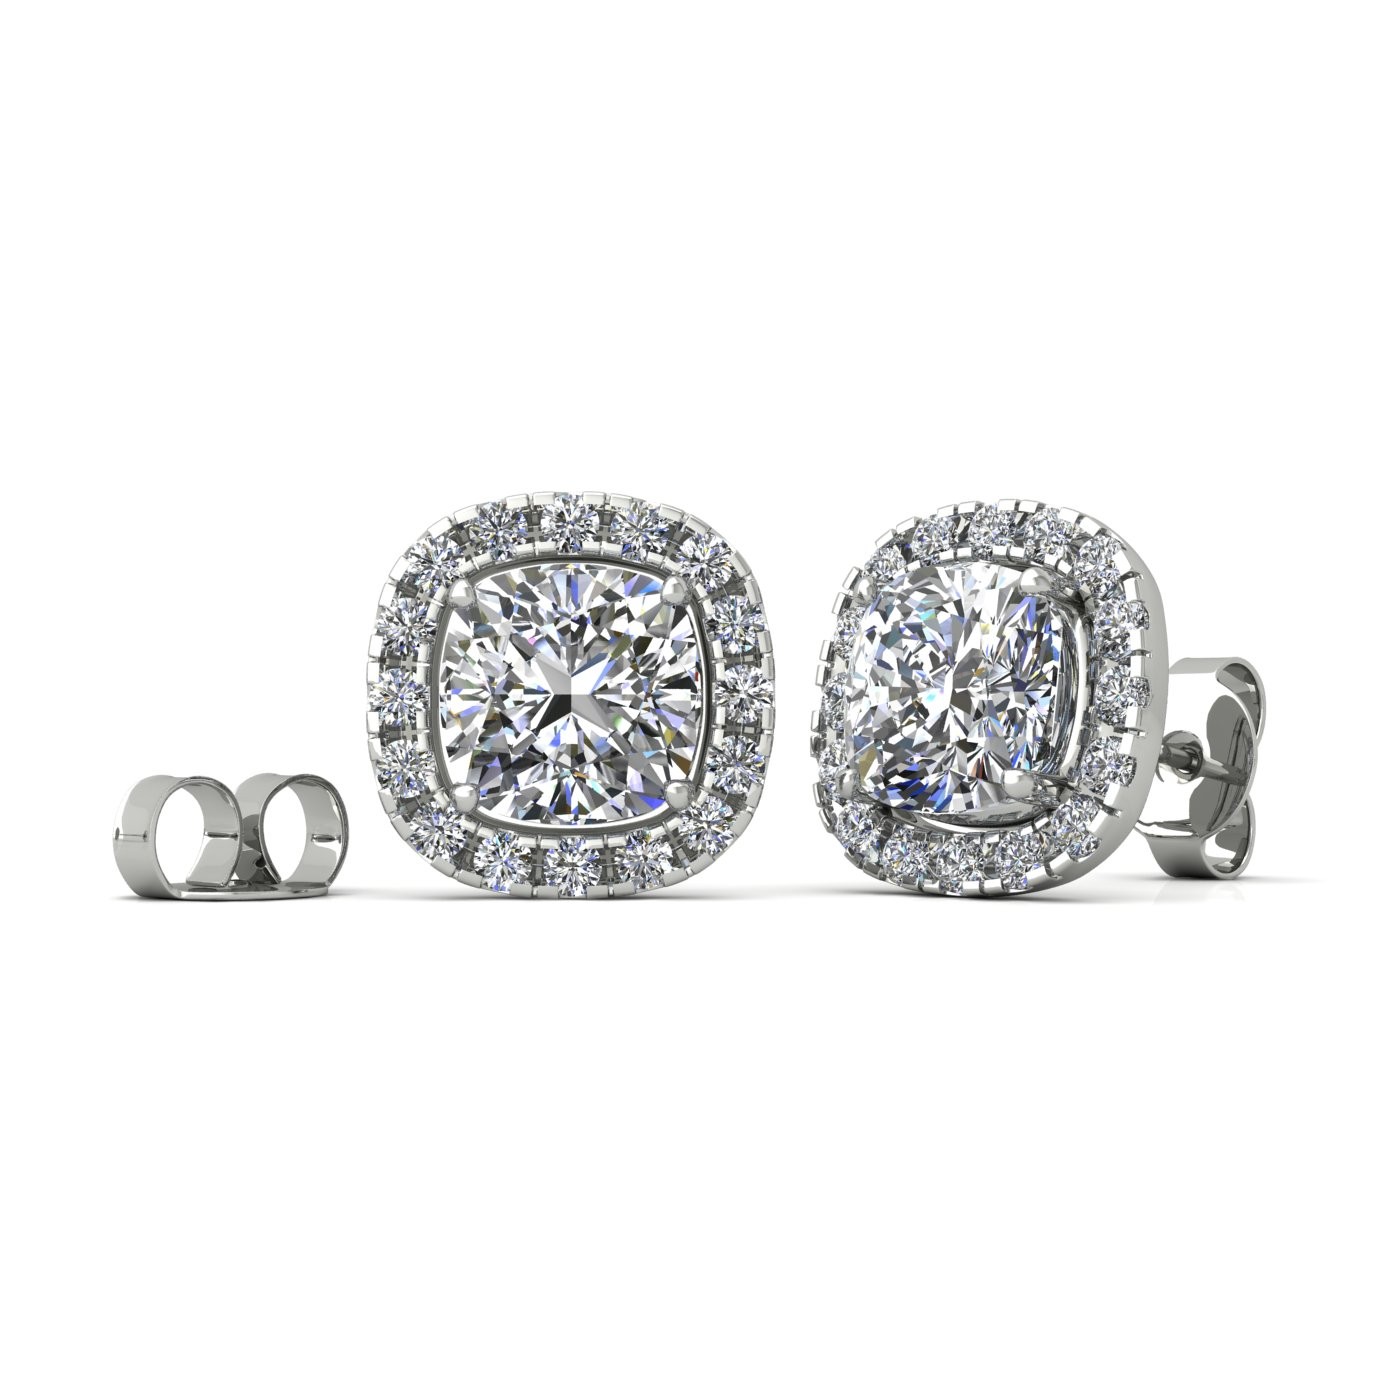 18k rose gold  1,0 ct each (2,0 tcw) 4 prongs cushion shape diamond earrings with diamond pavÉ set halo Photos & images